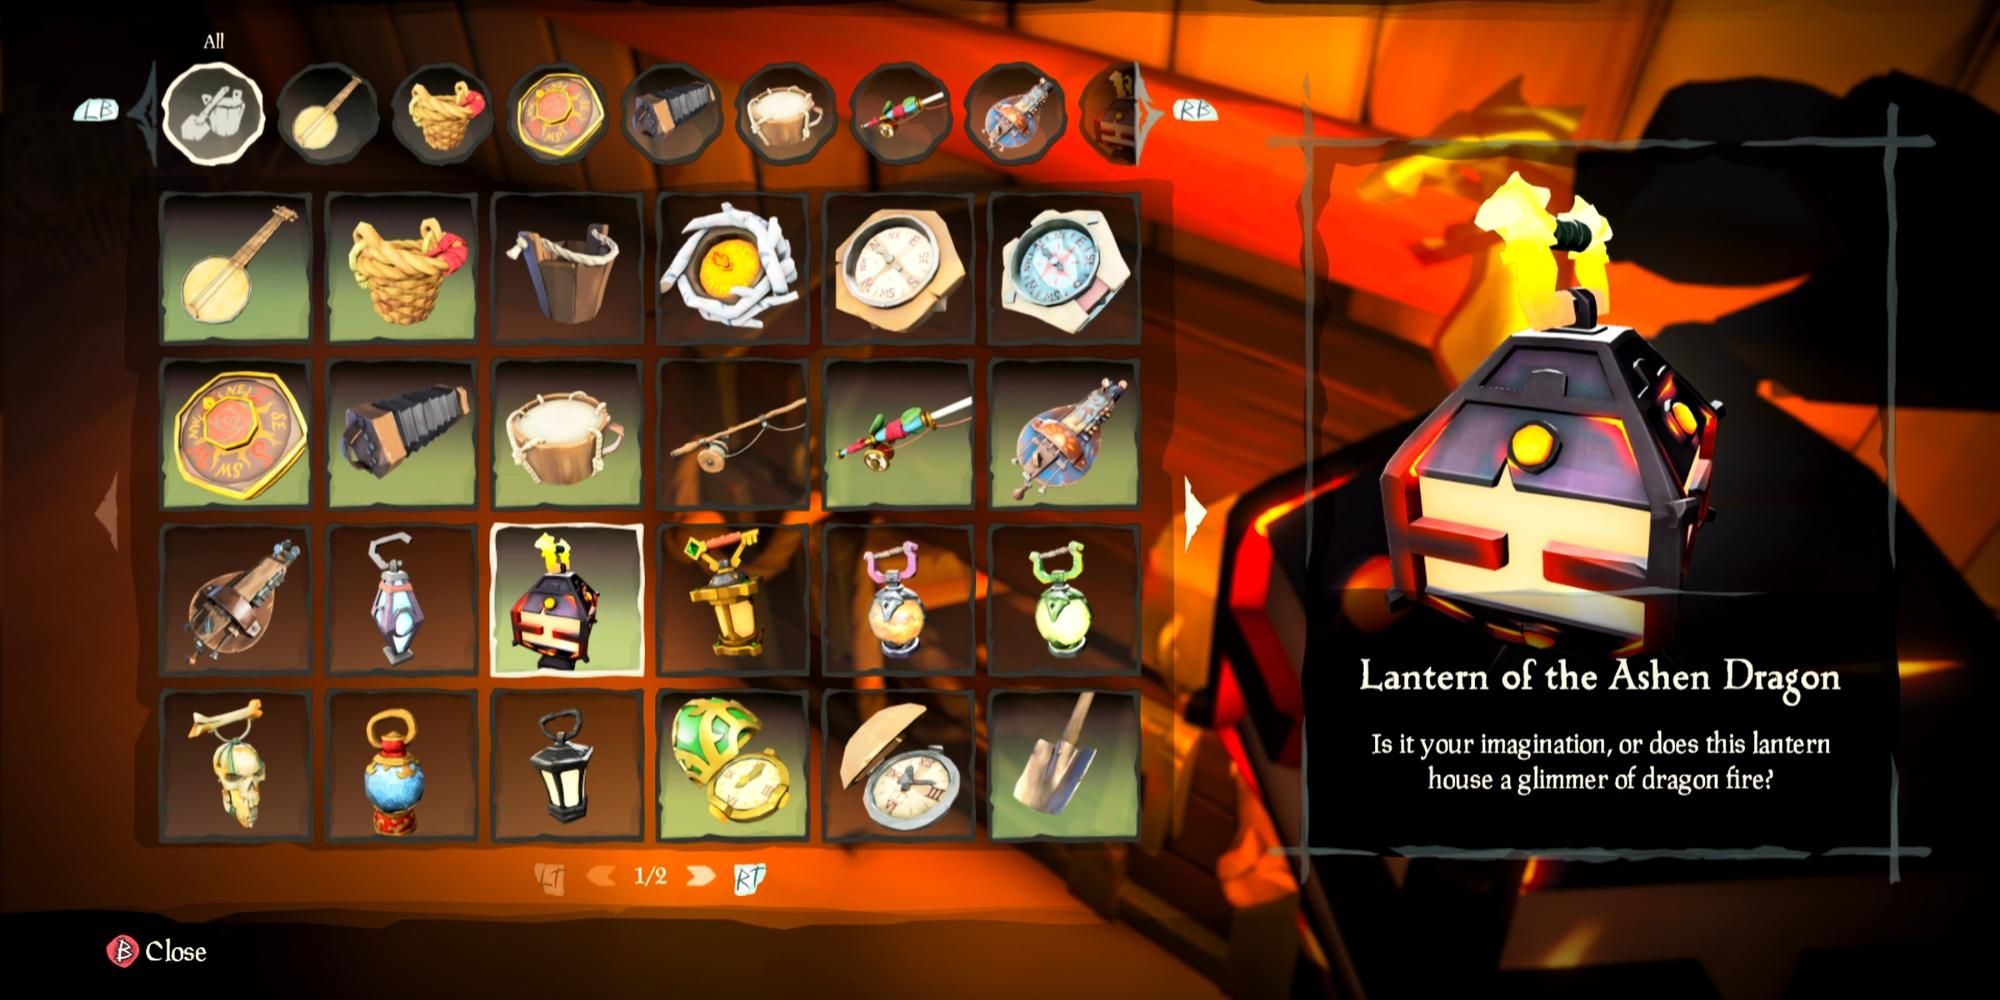 Ashen Dragon Lantern in the Sea of Thieves equipment menu.